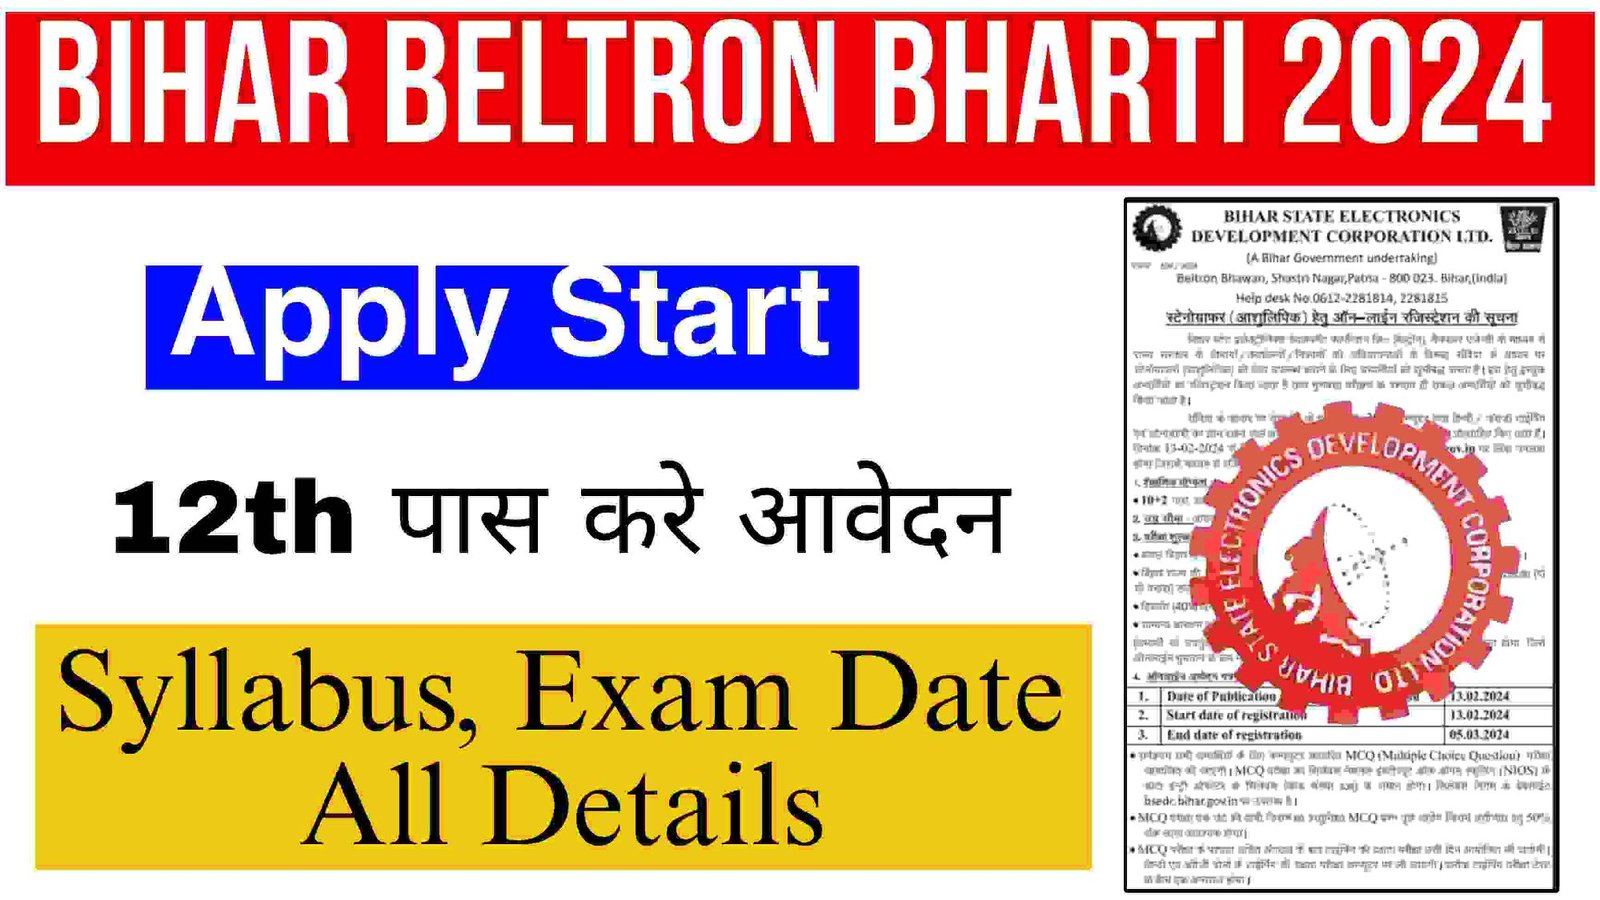 Bihar Beltron Bharti 2024